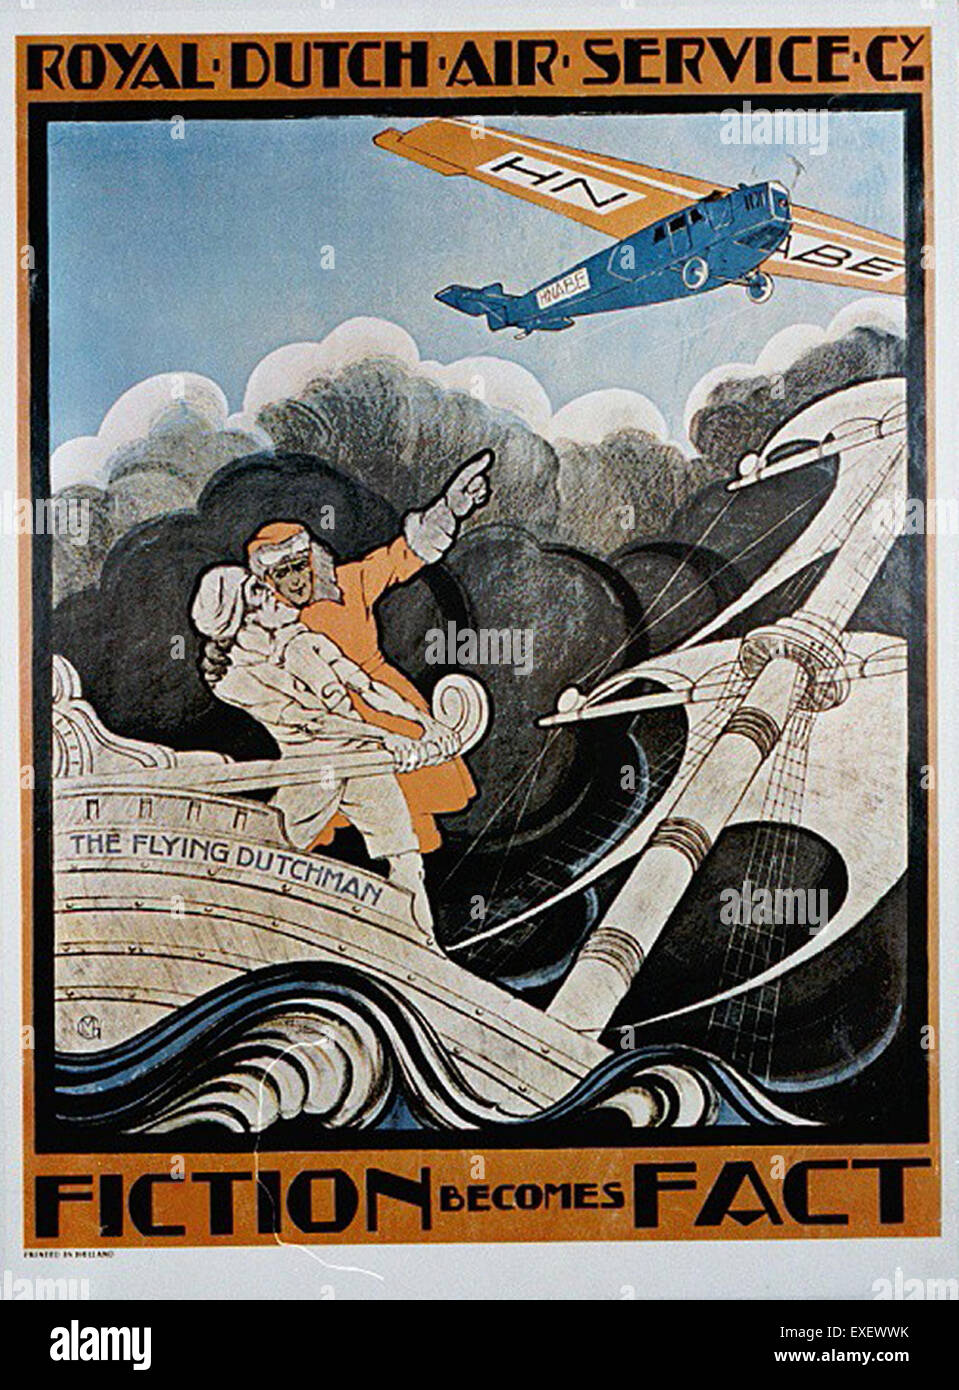 Royal Dutch Air Service Poster Stock Photo